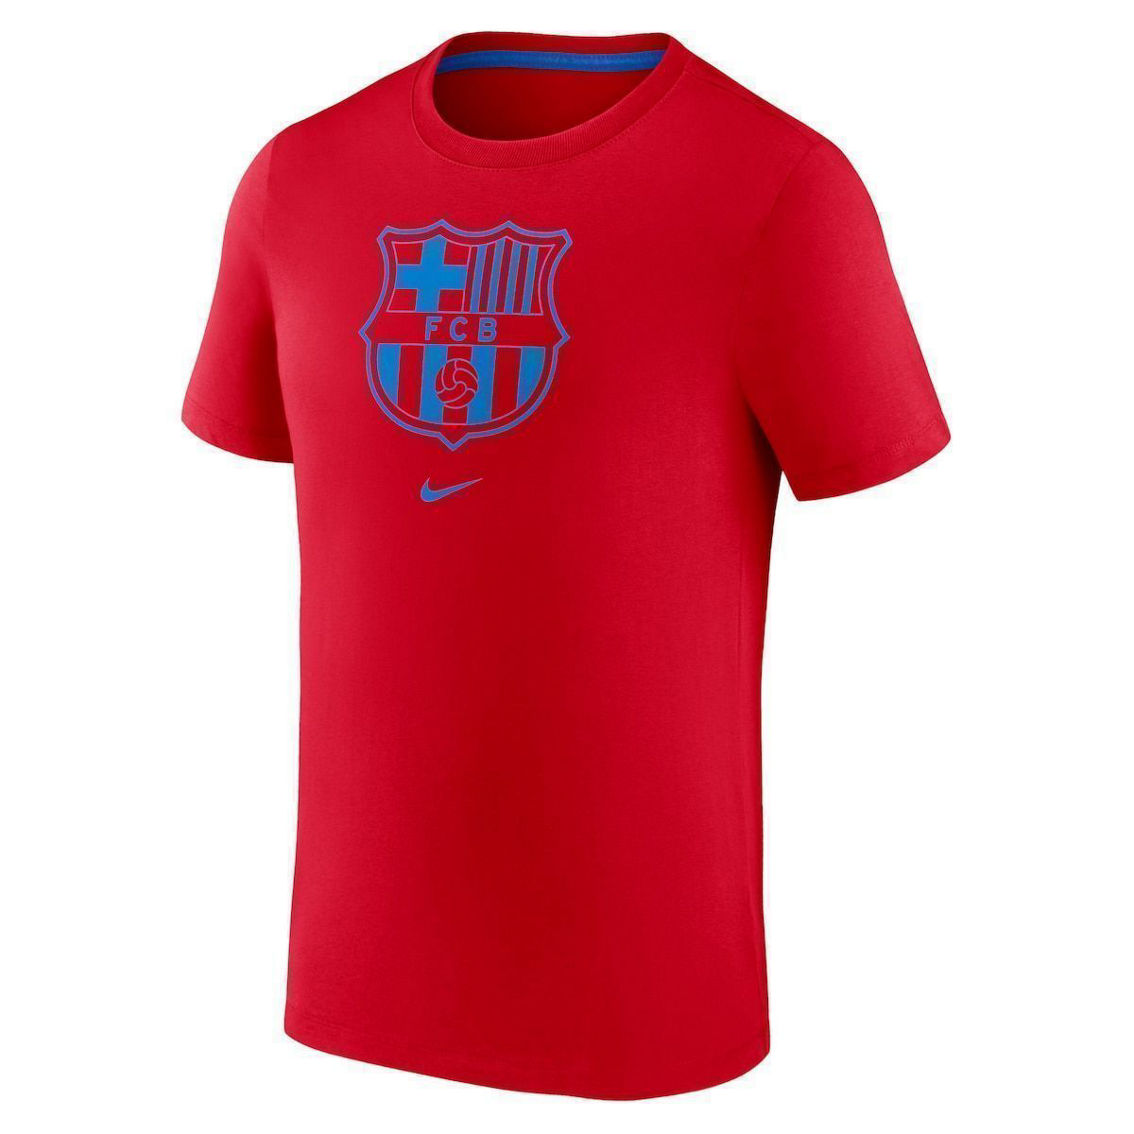 Nike Men's Red Barcelona Team Crest T-Shirt - Image 3 of 4